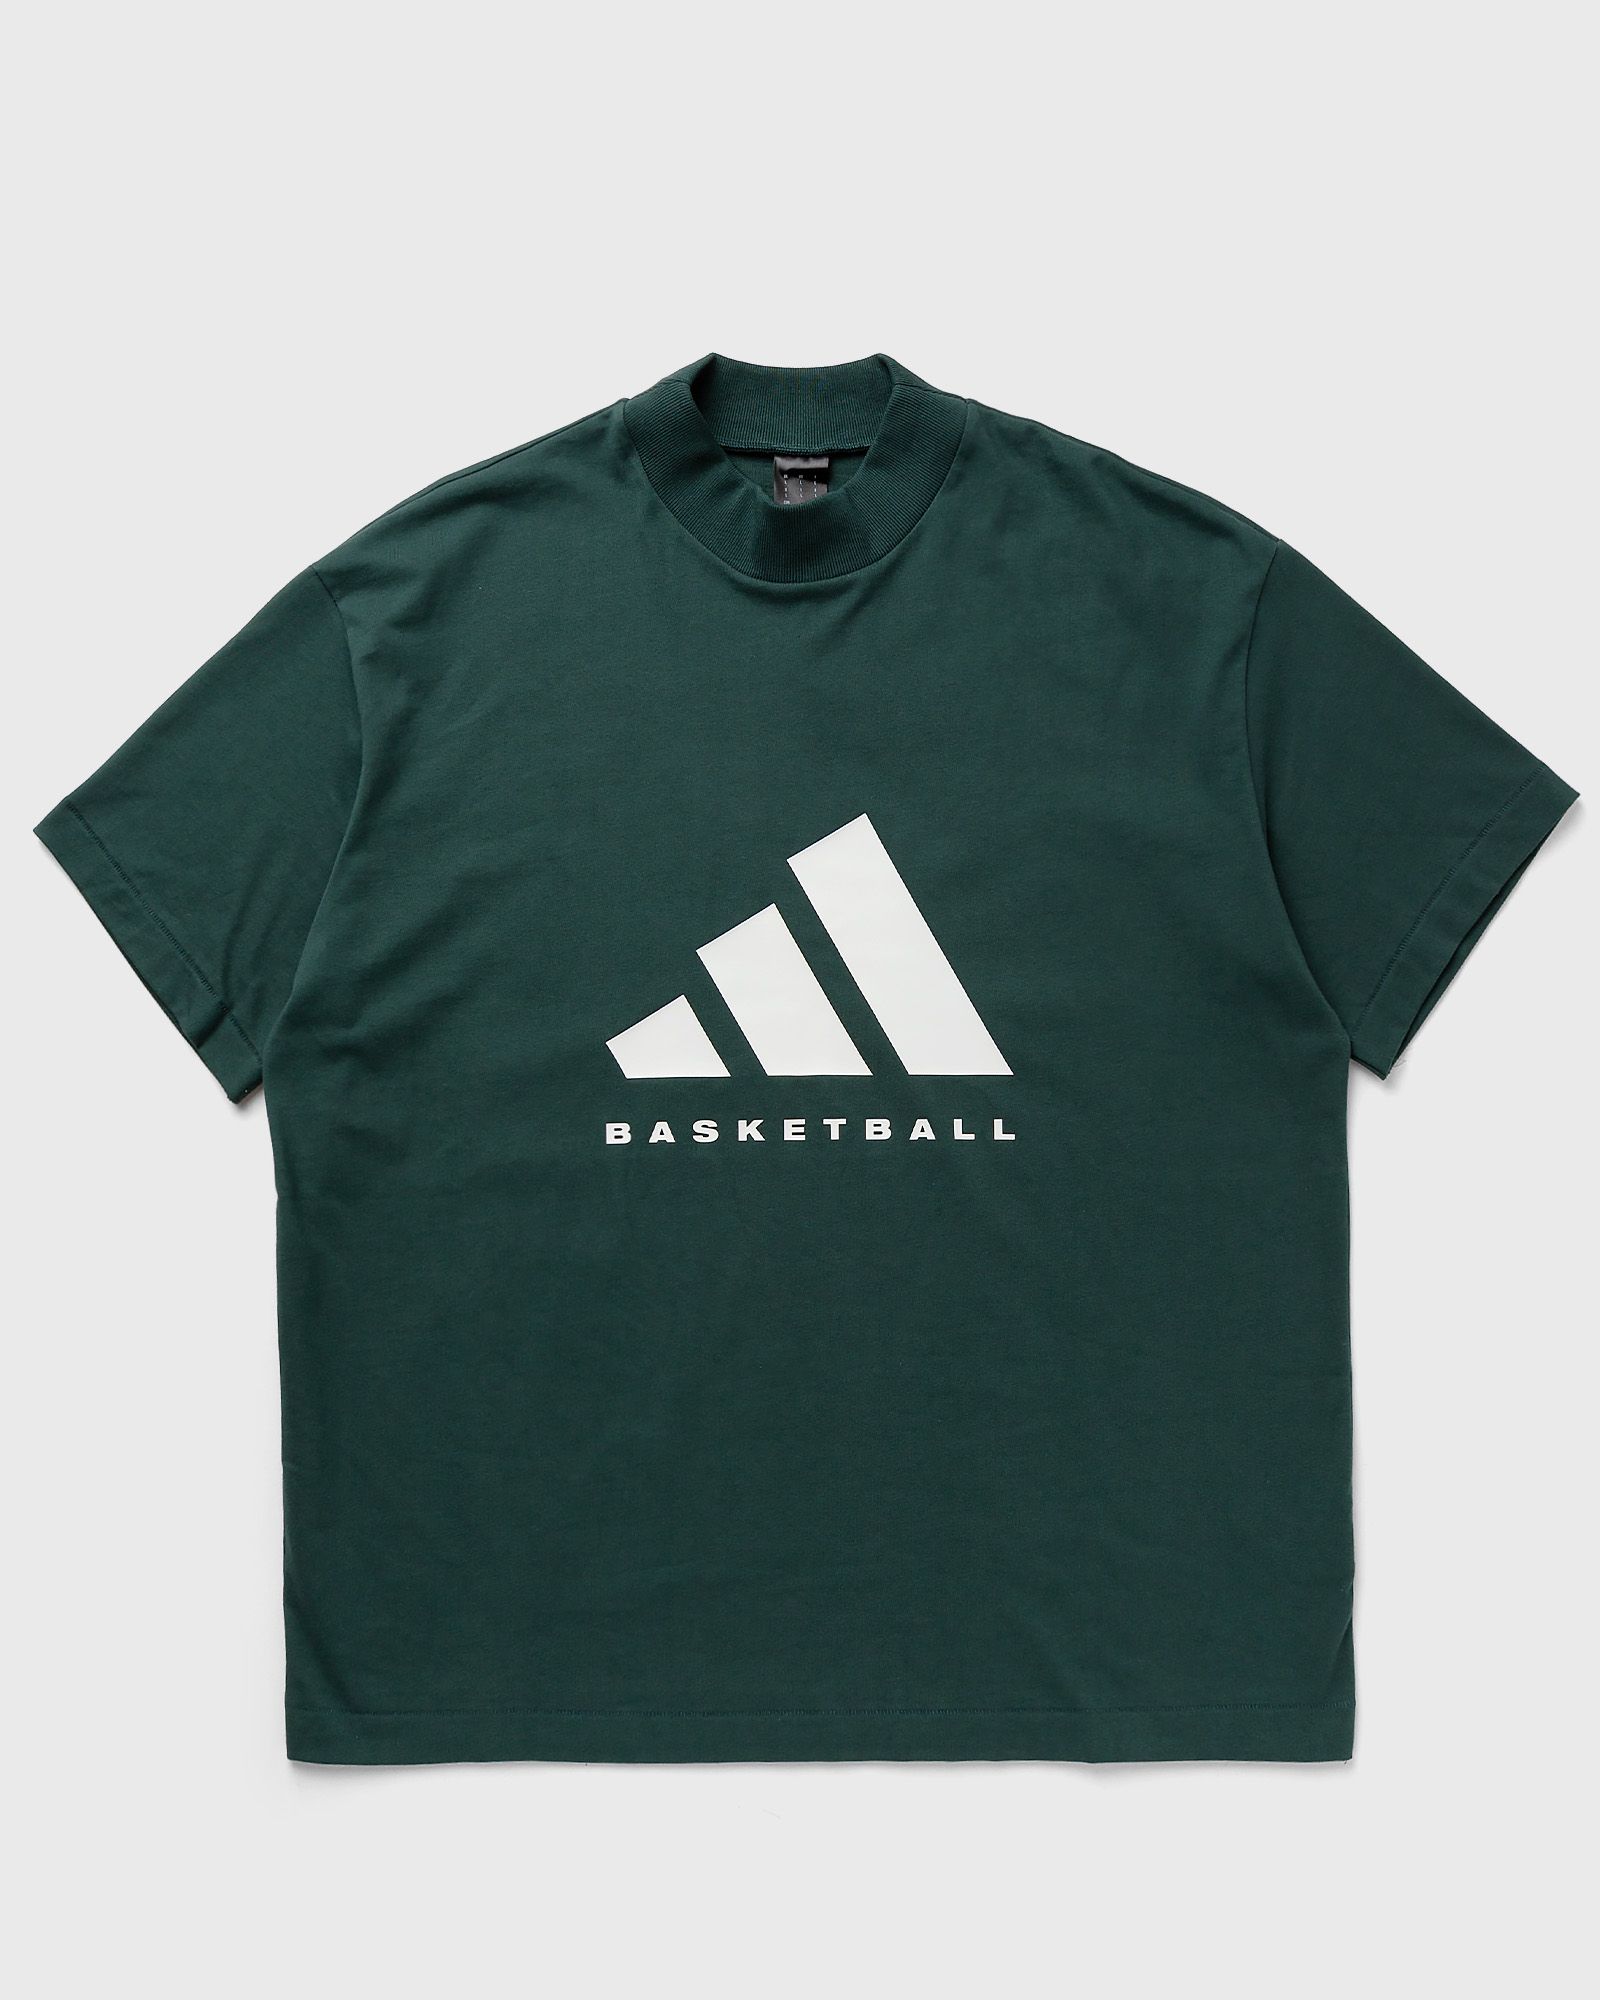 Adidas - basketball cotton jersey tee men shortsleeves green in größe:l